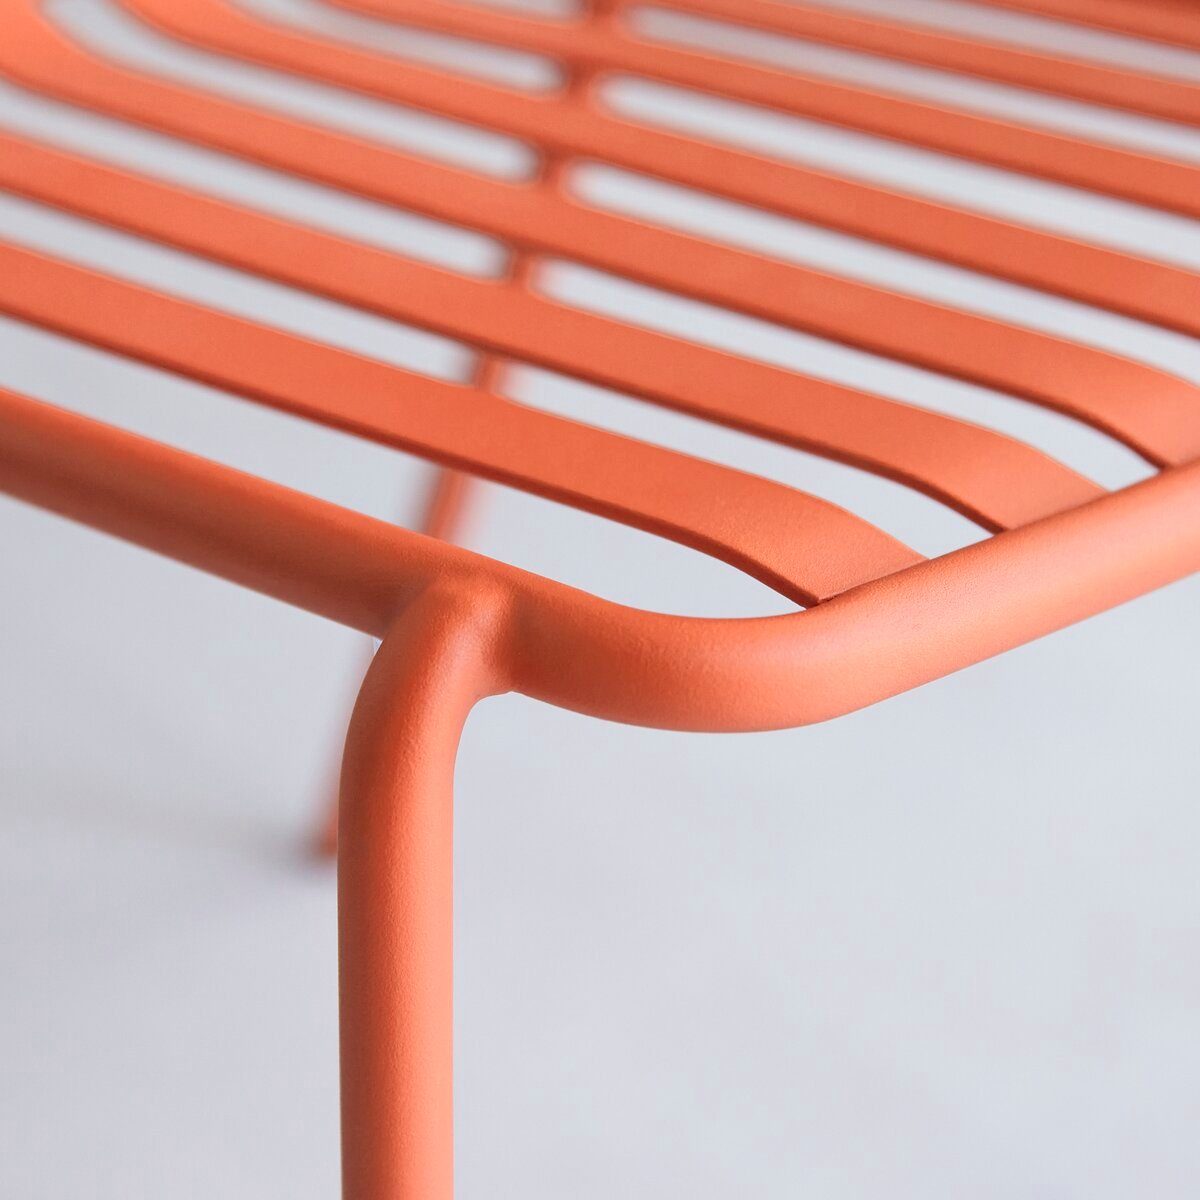 Tikamoon Metall Stuhl orange aus Esszimmerstuhl